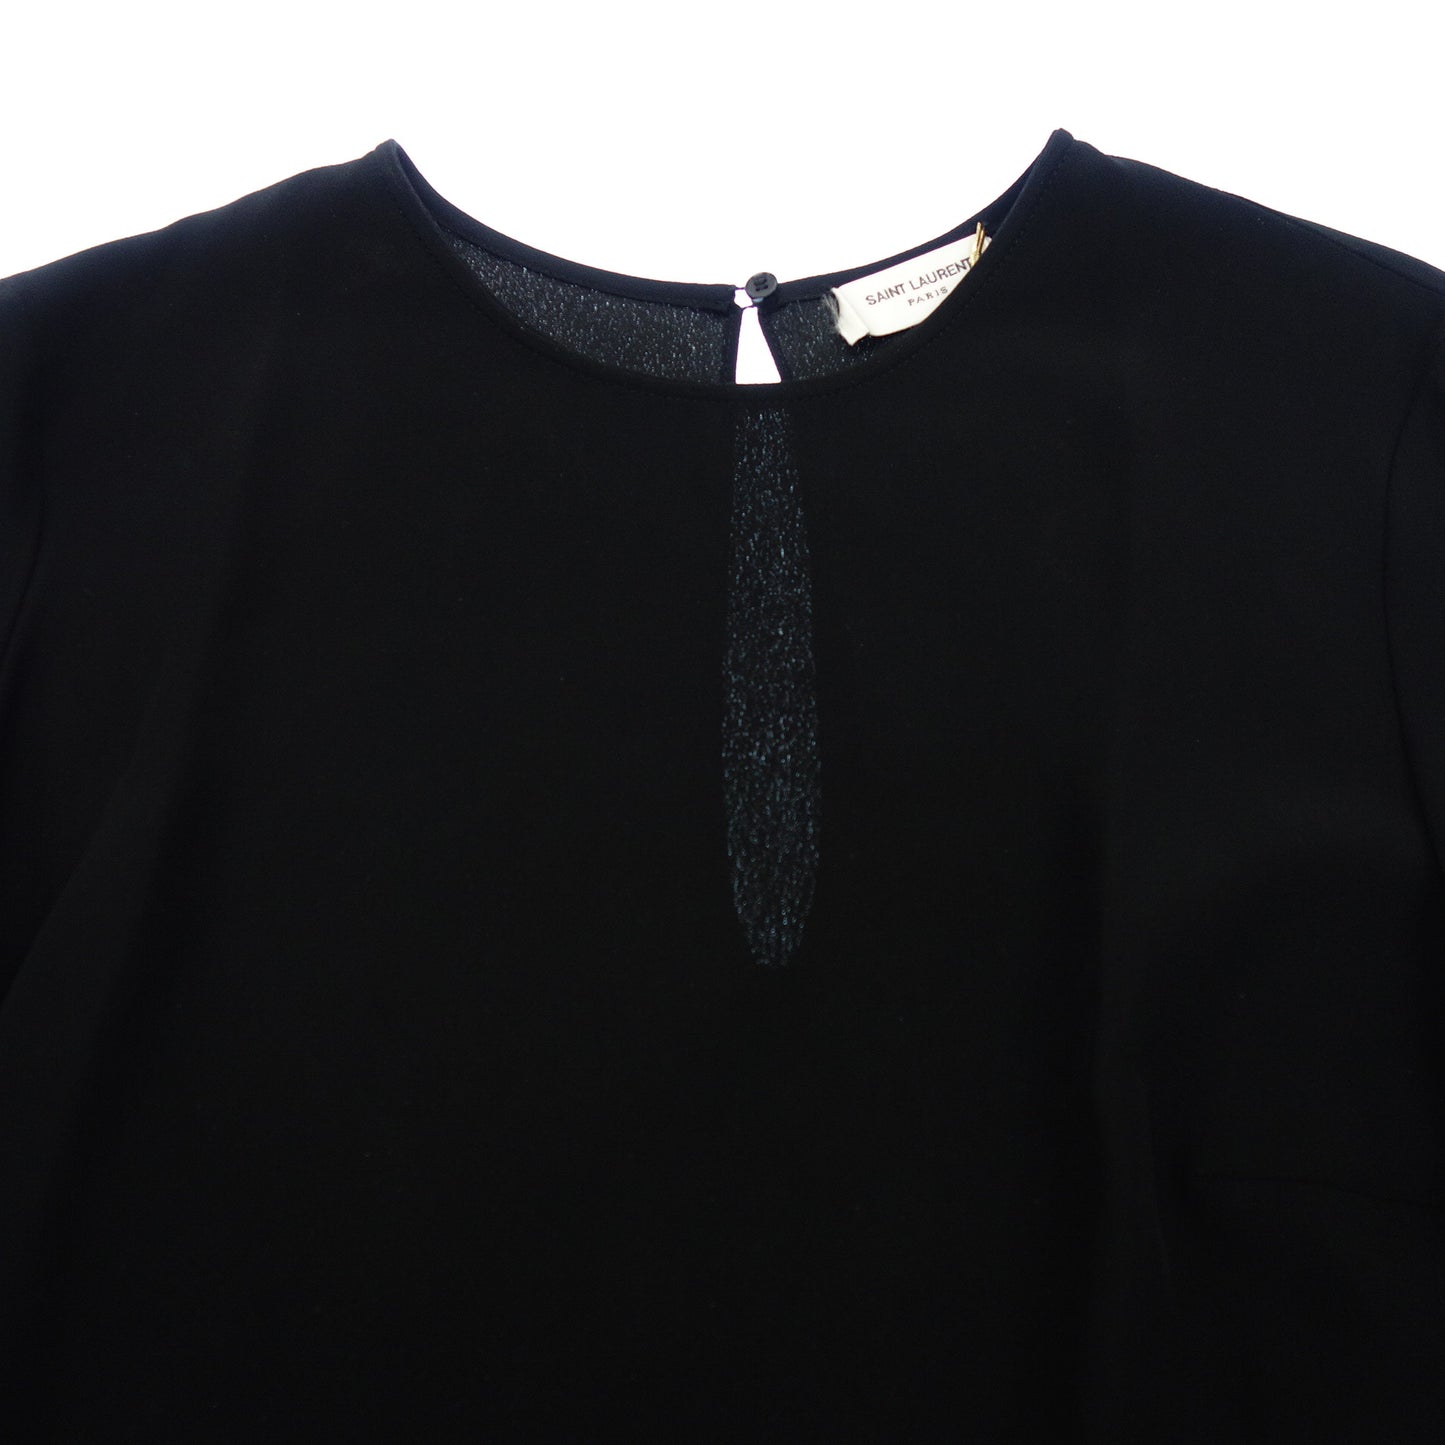 Saint Laurent 衬衫 454629 女式 黑色 F36 SANIT LAURENT [AFB15] [二手] 